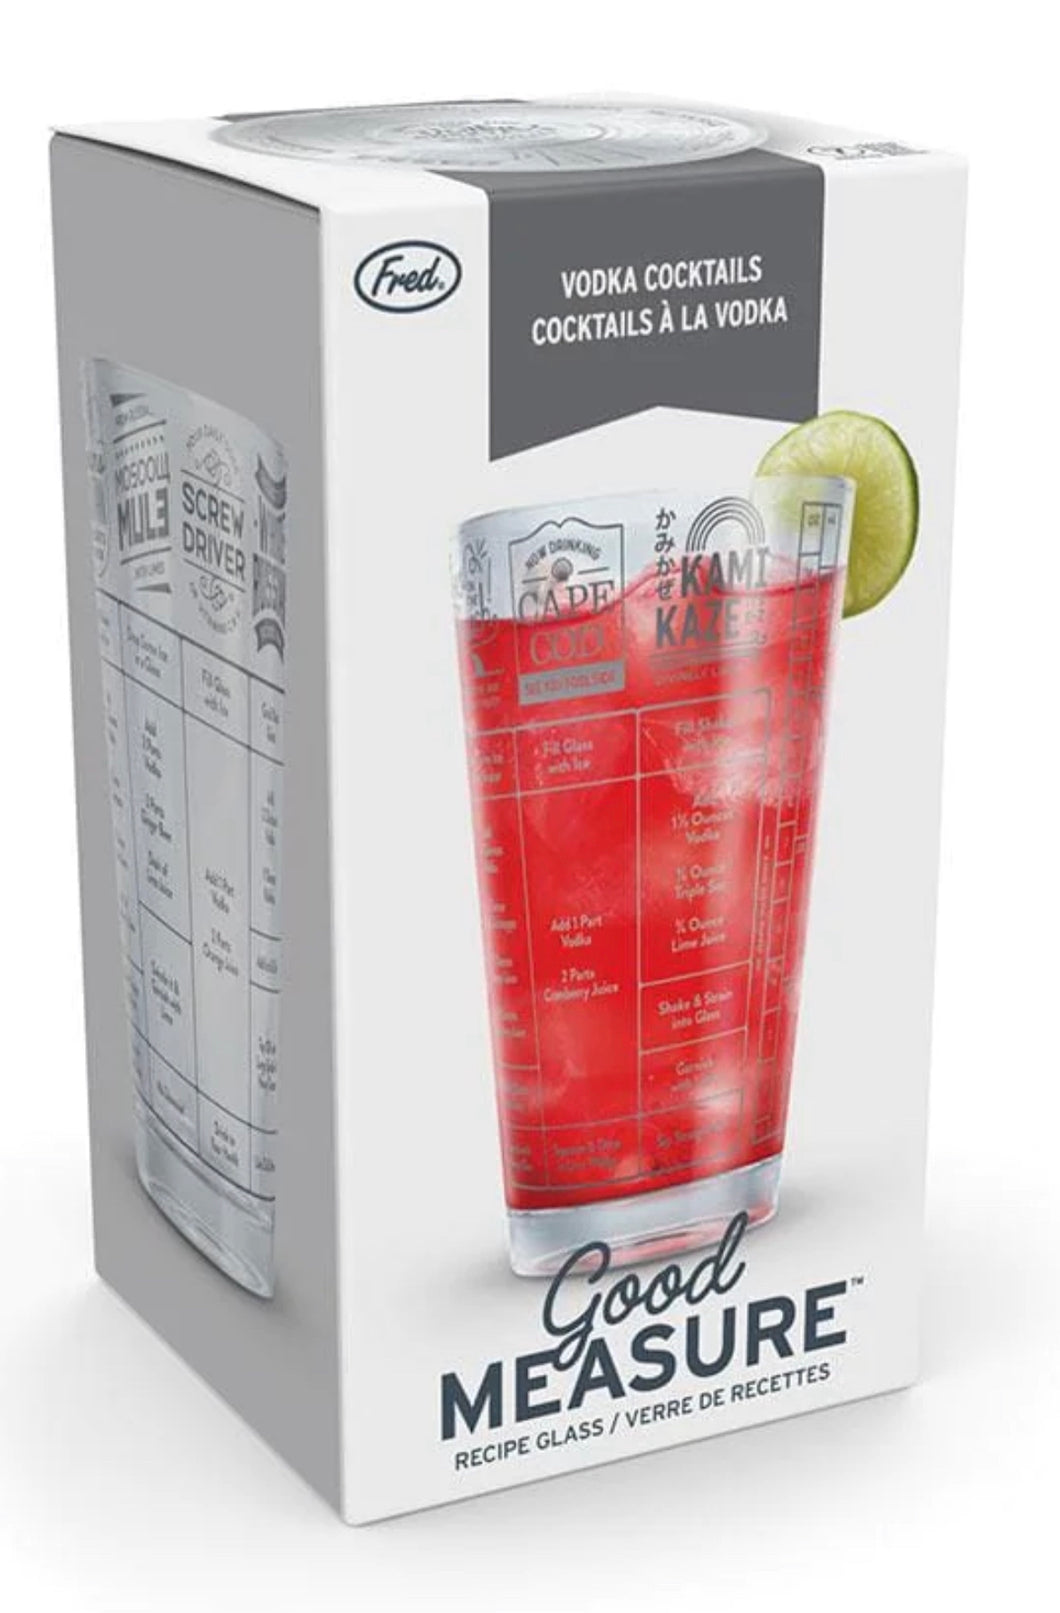 VODKA Cocktail Recipe Glass